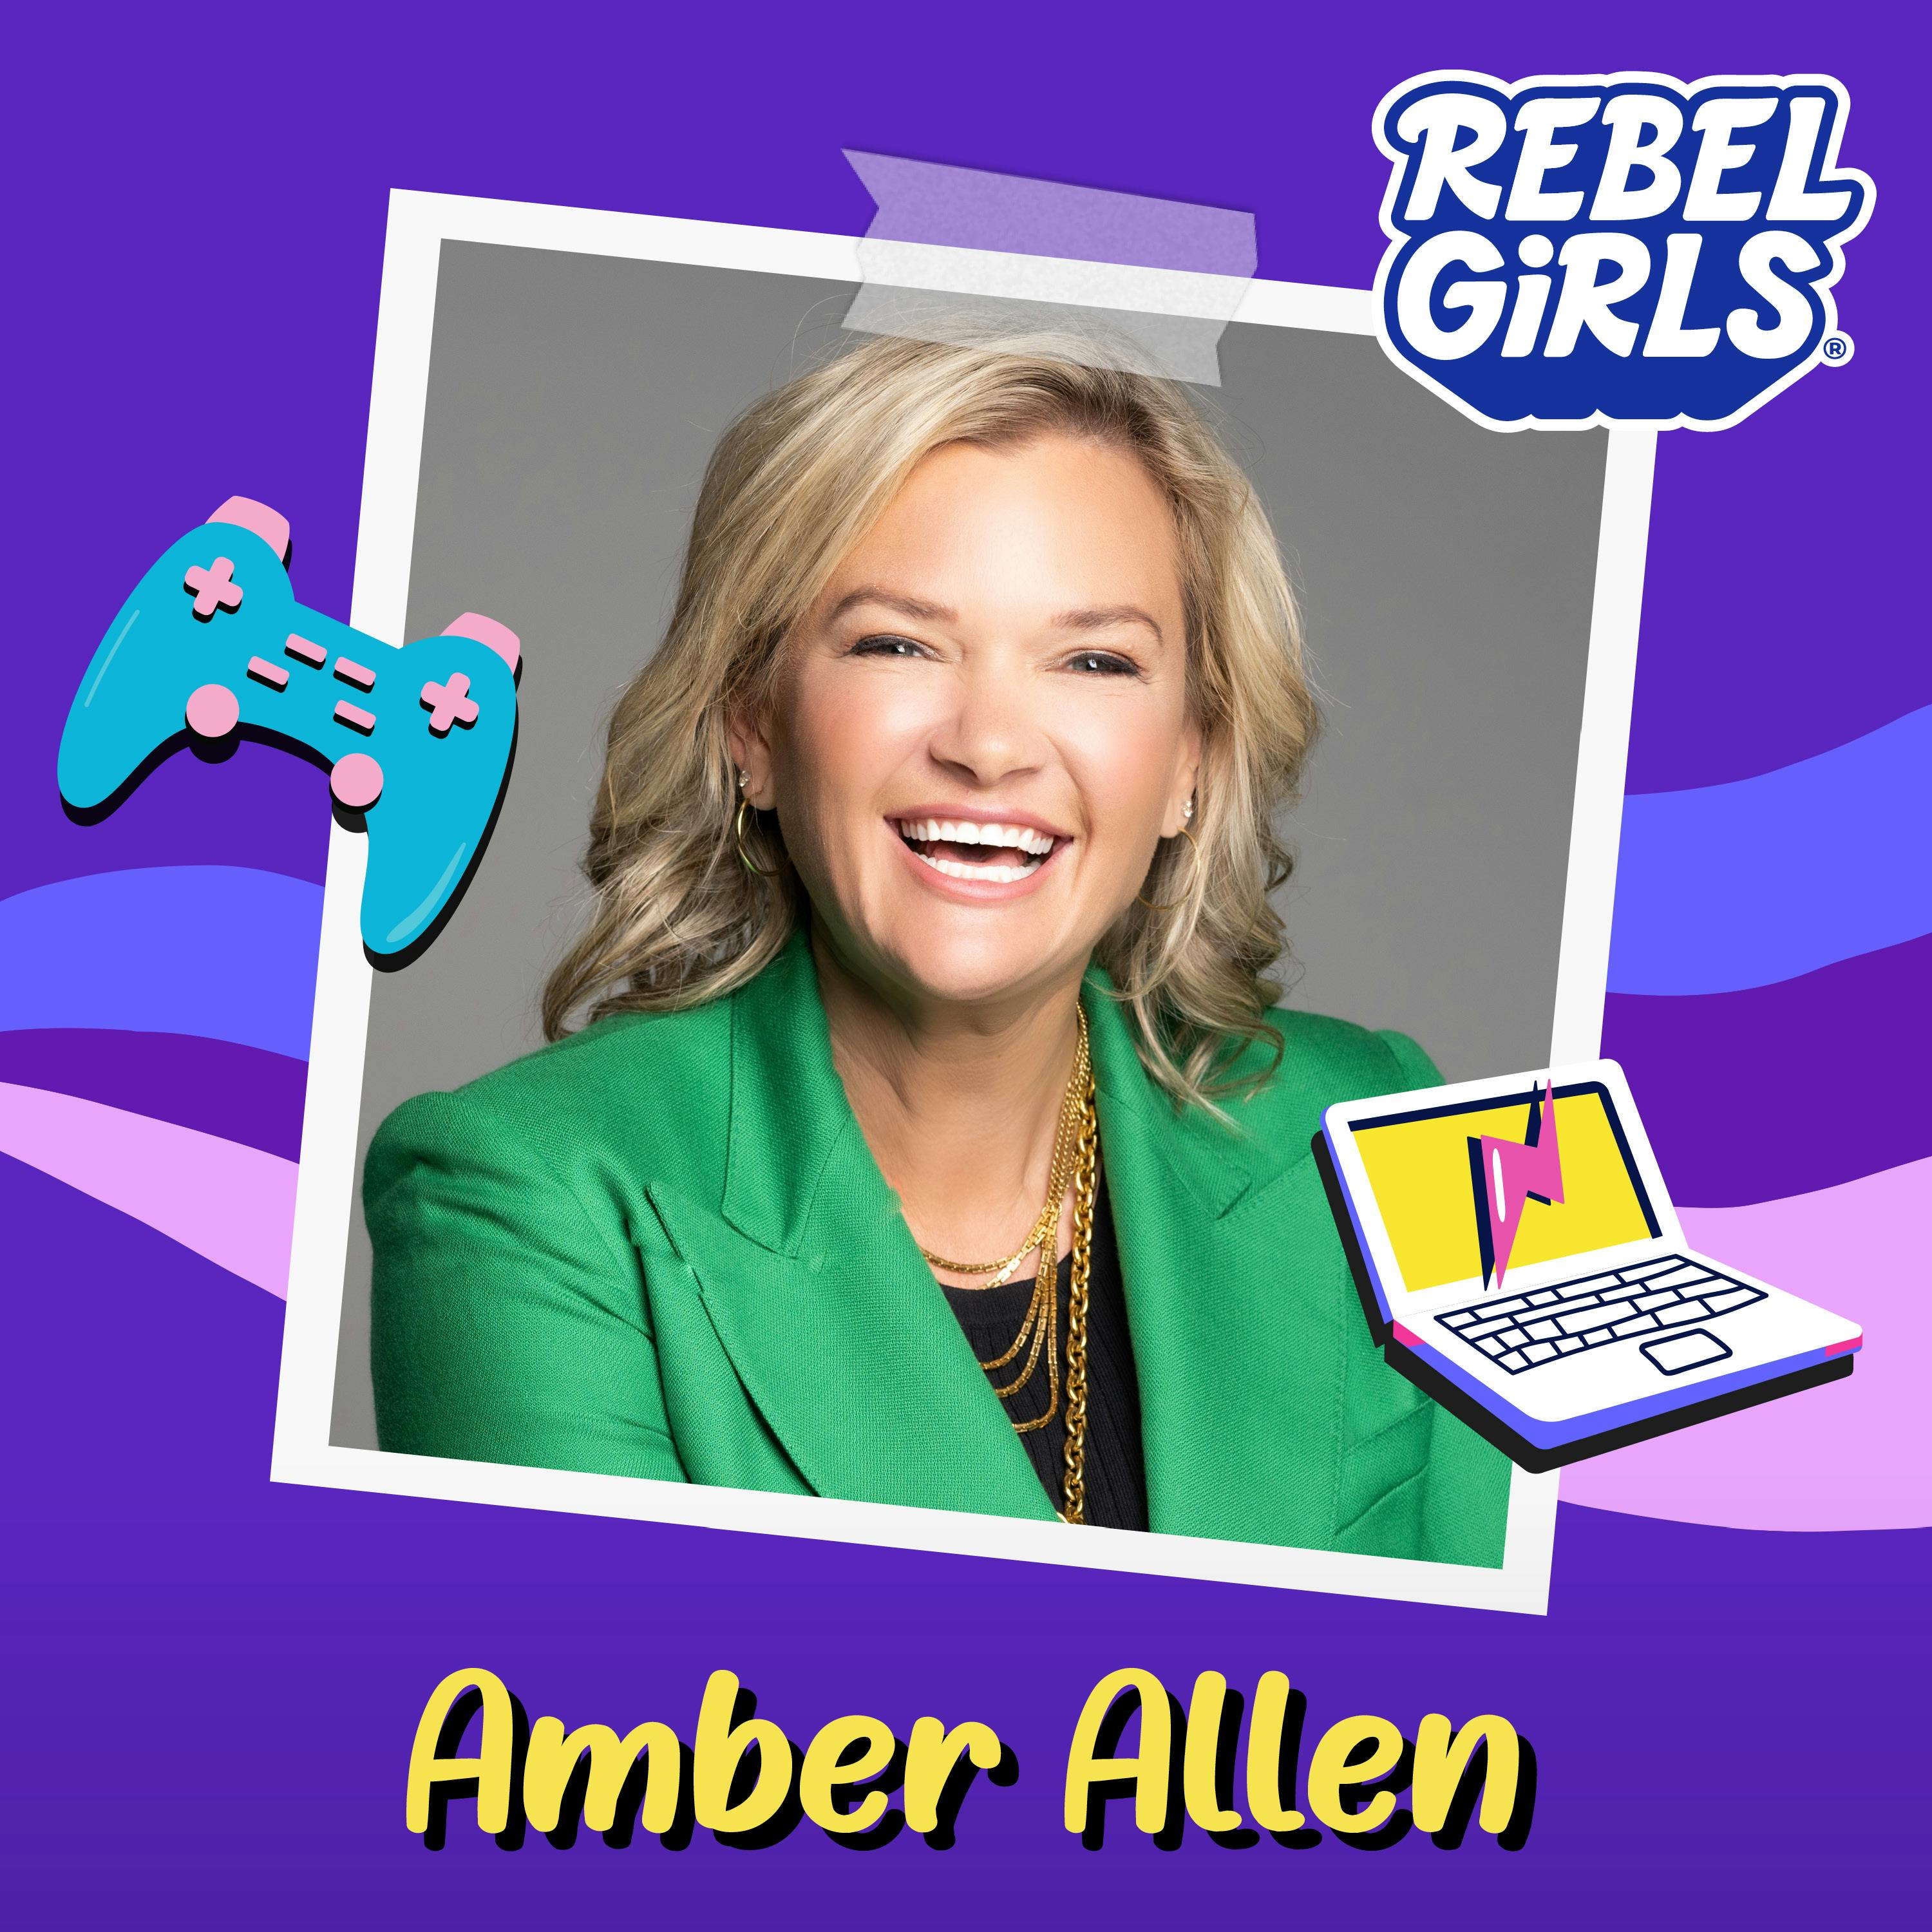 Get to Know Amber Allen